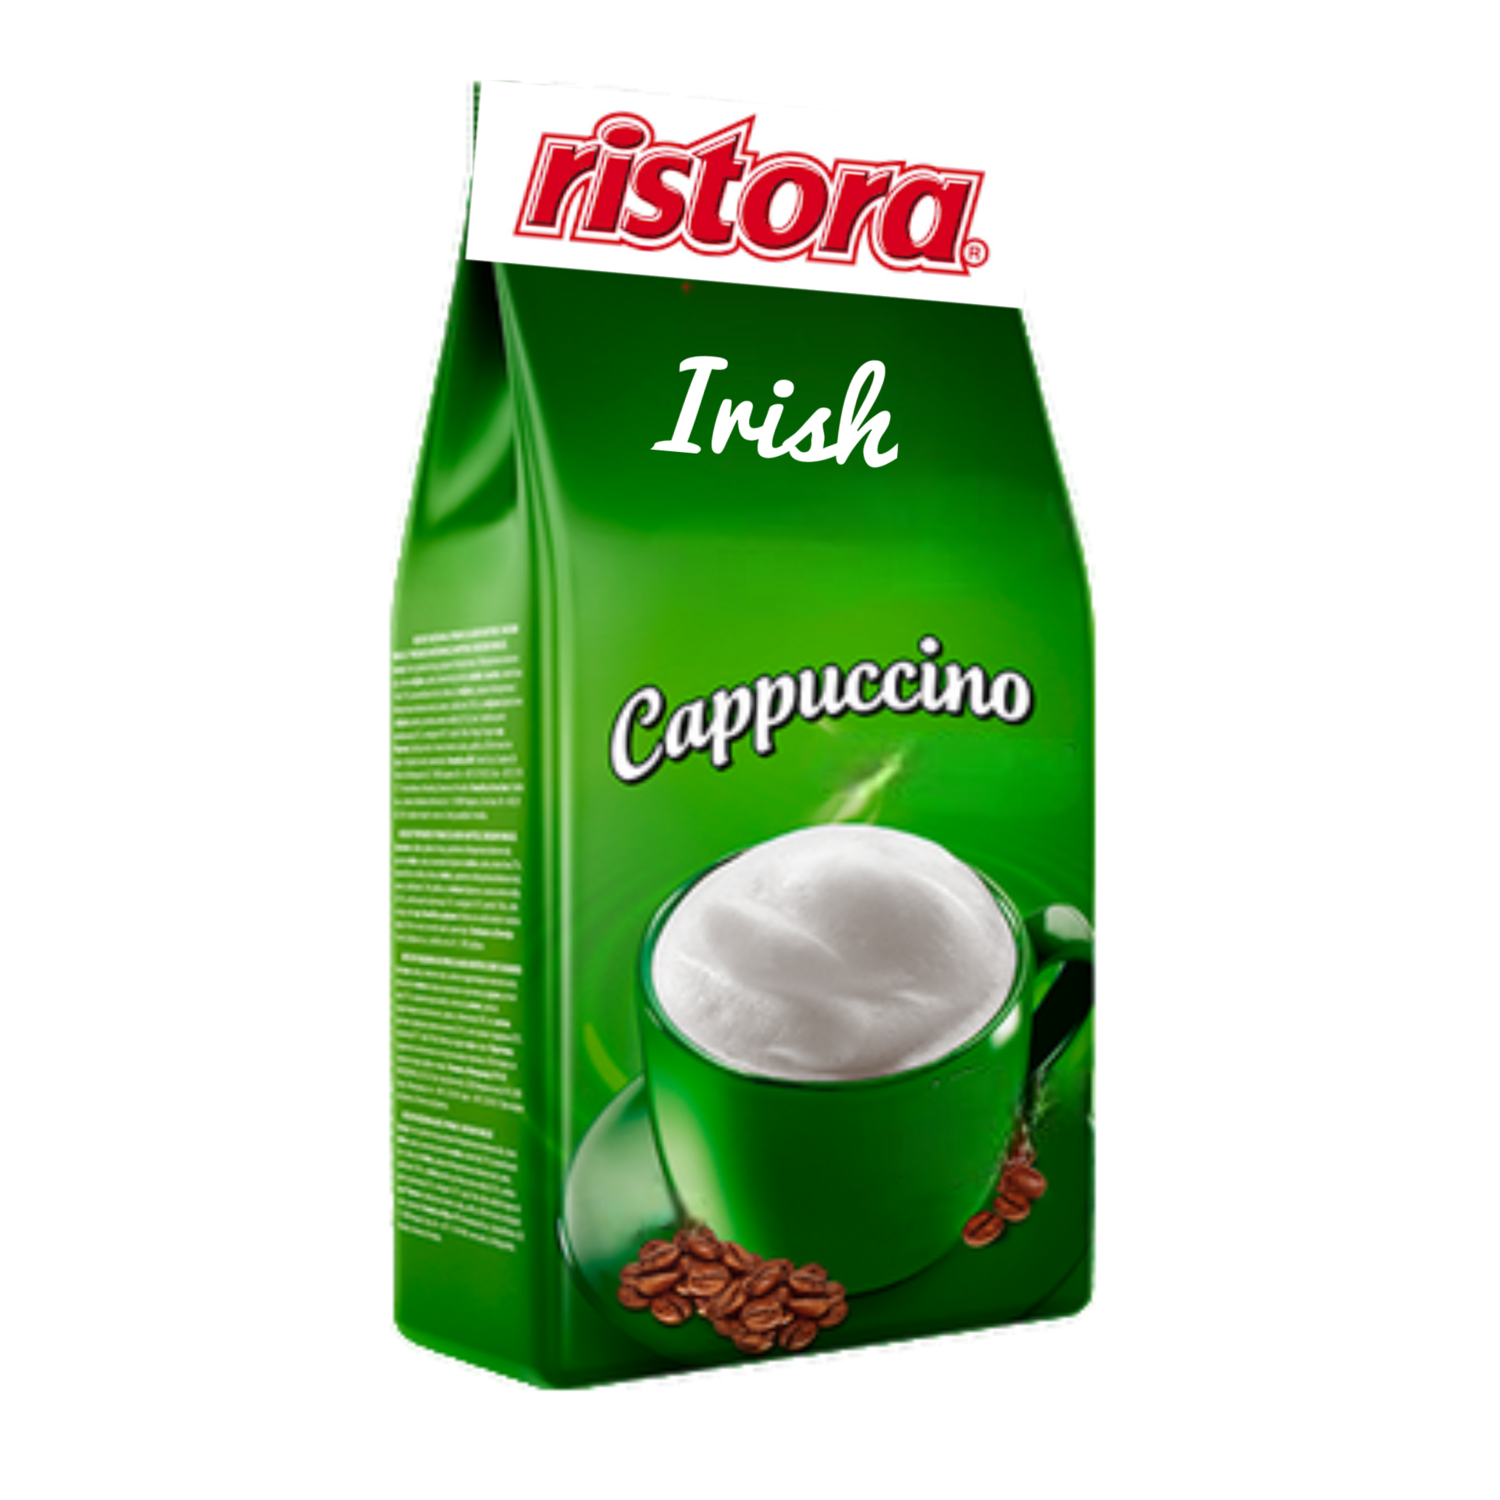 Ristora Premium Irish cappuccino x 1 kg